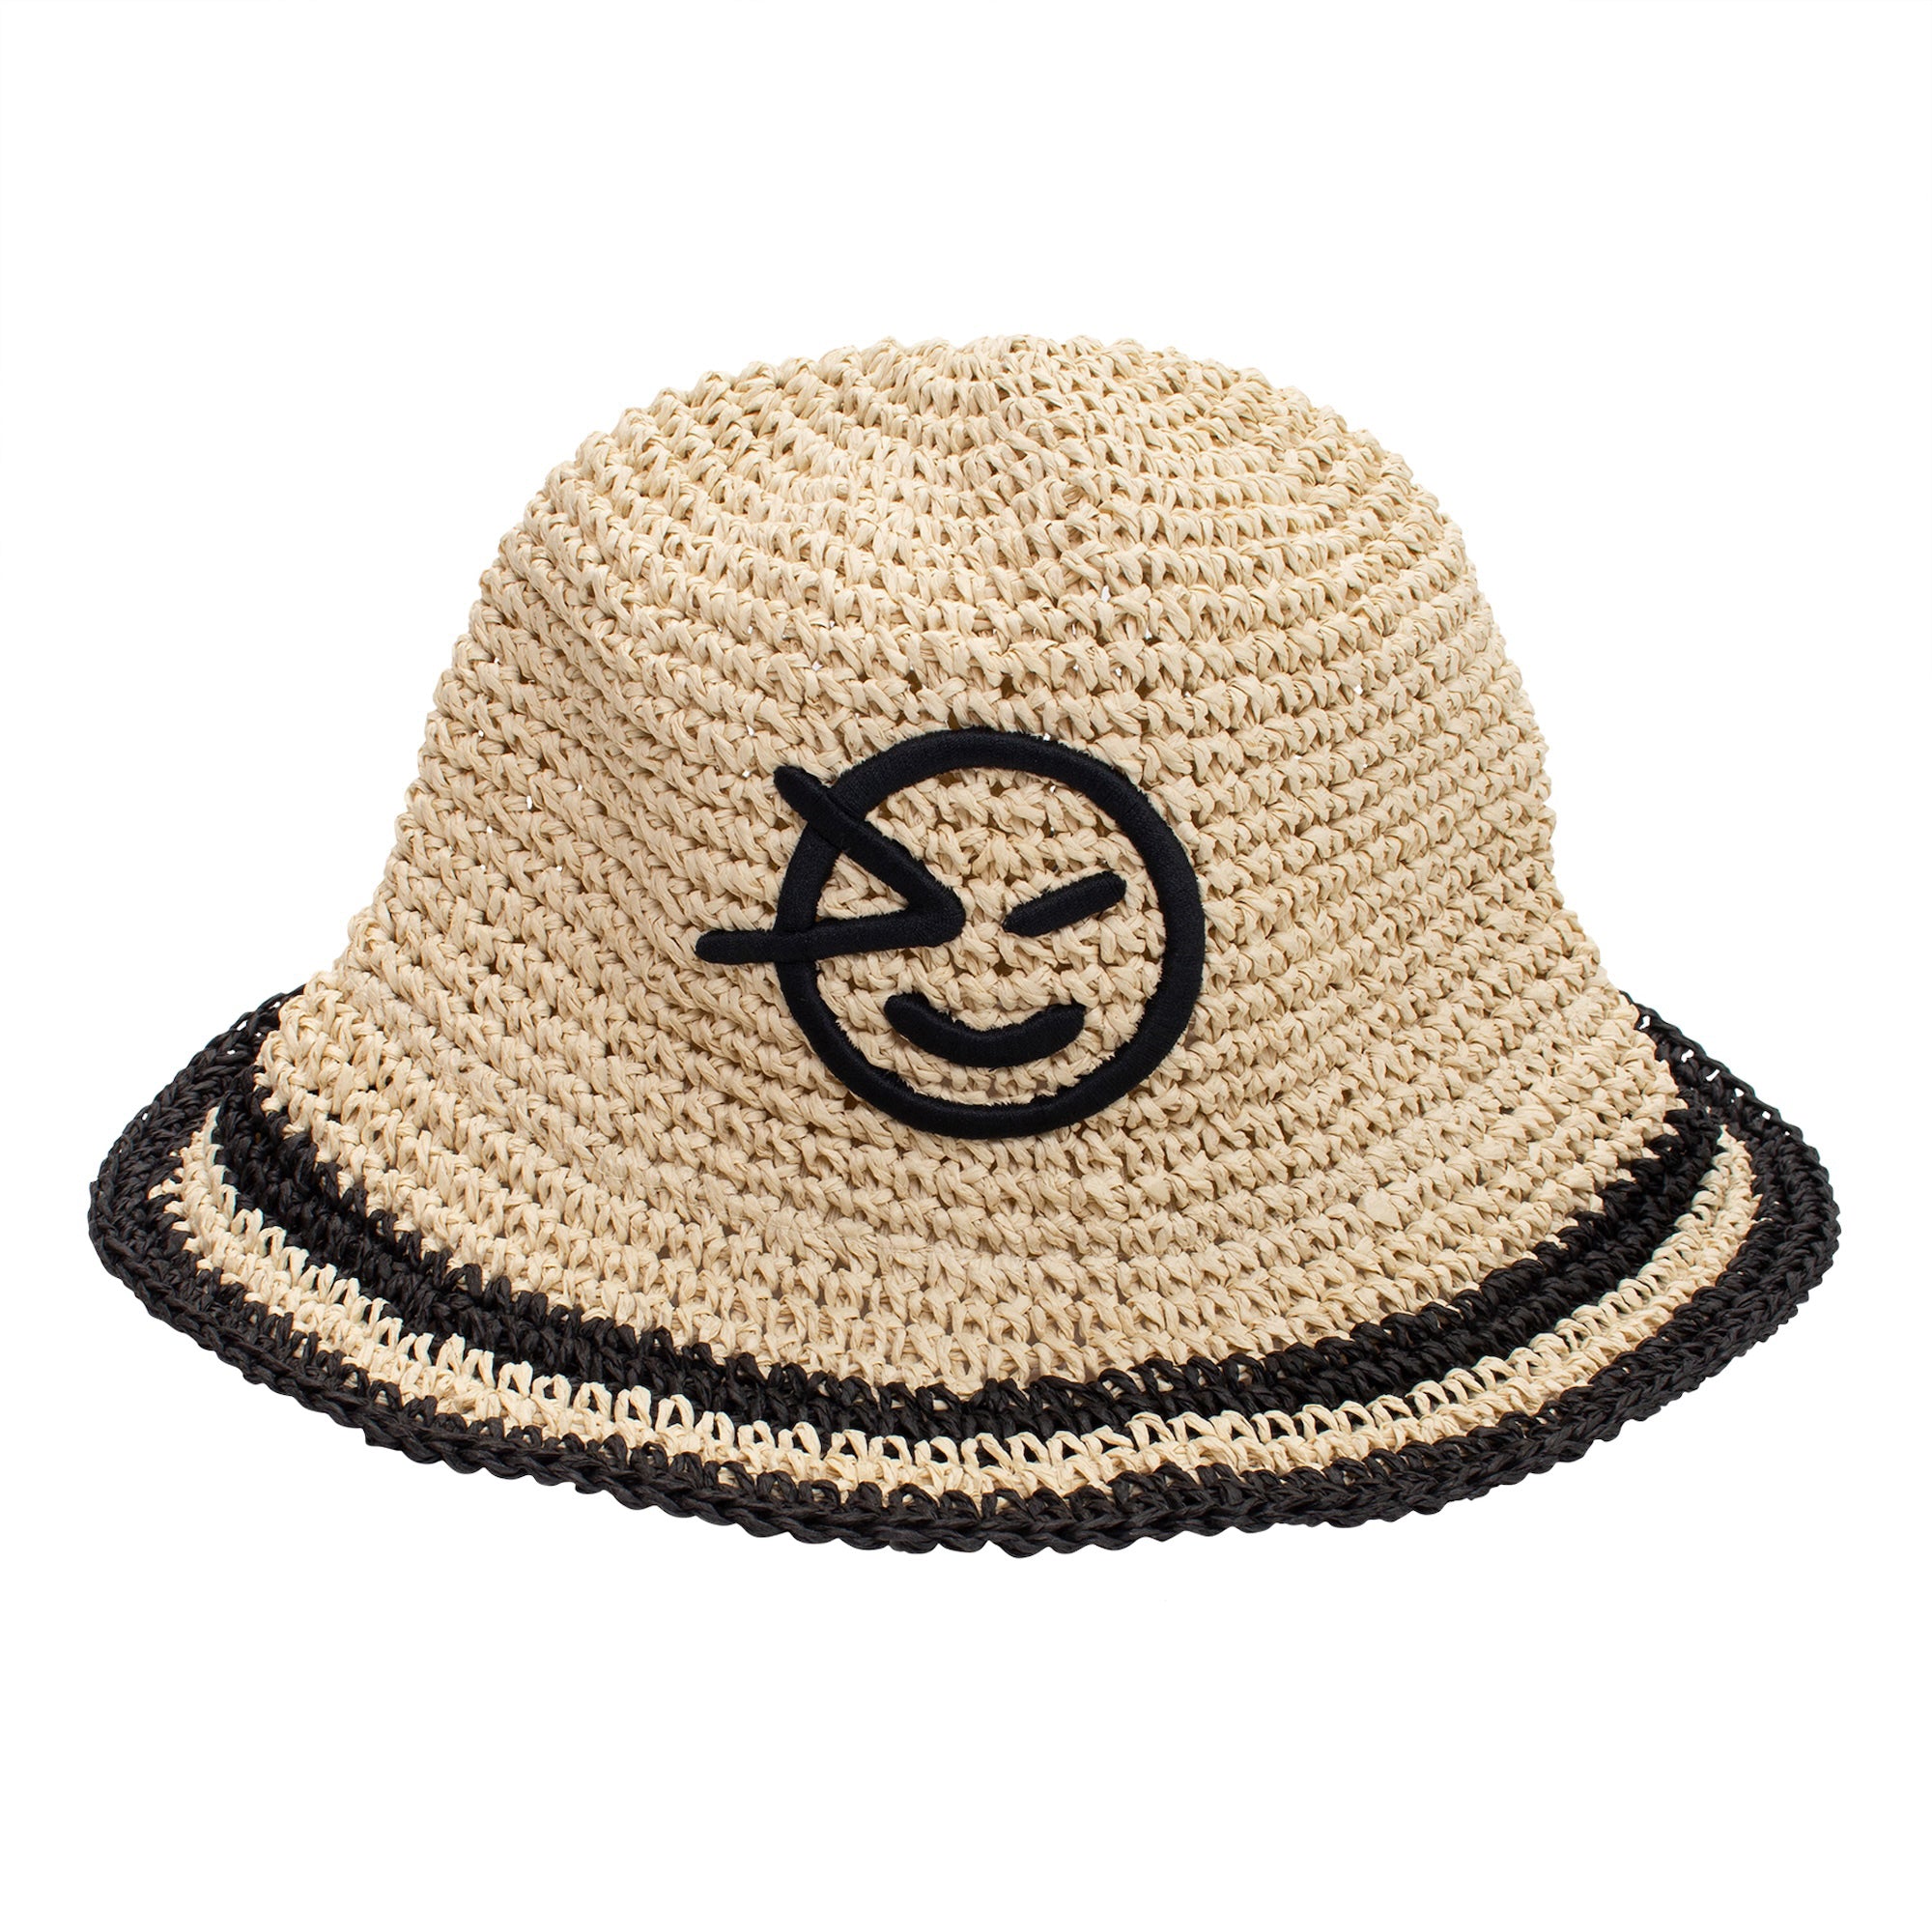 Crochet Hat - Natural/Straw